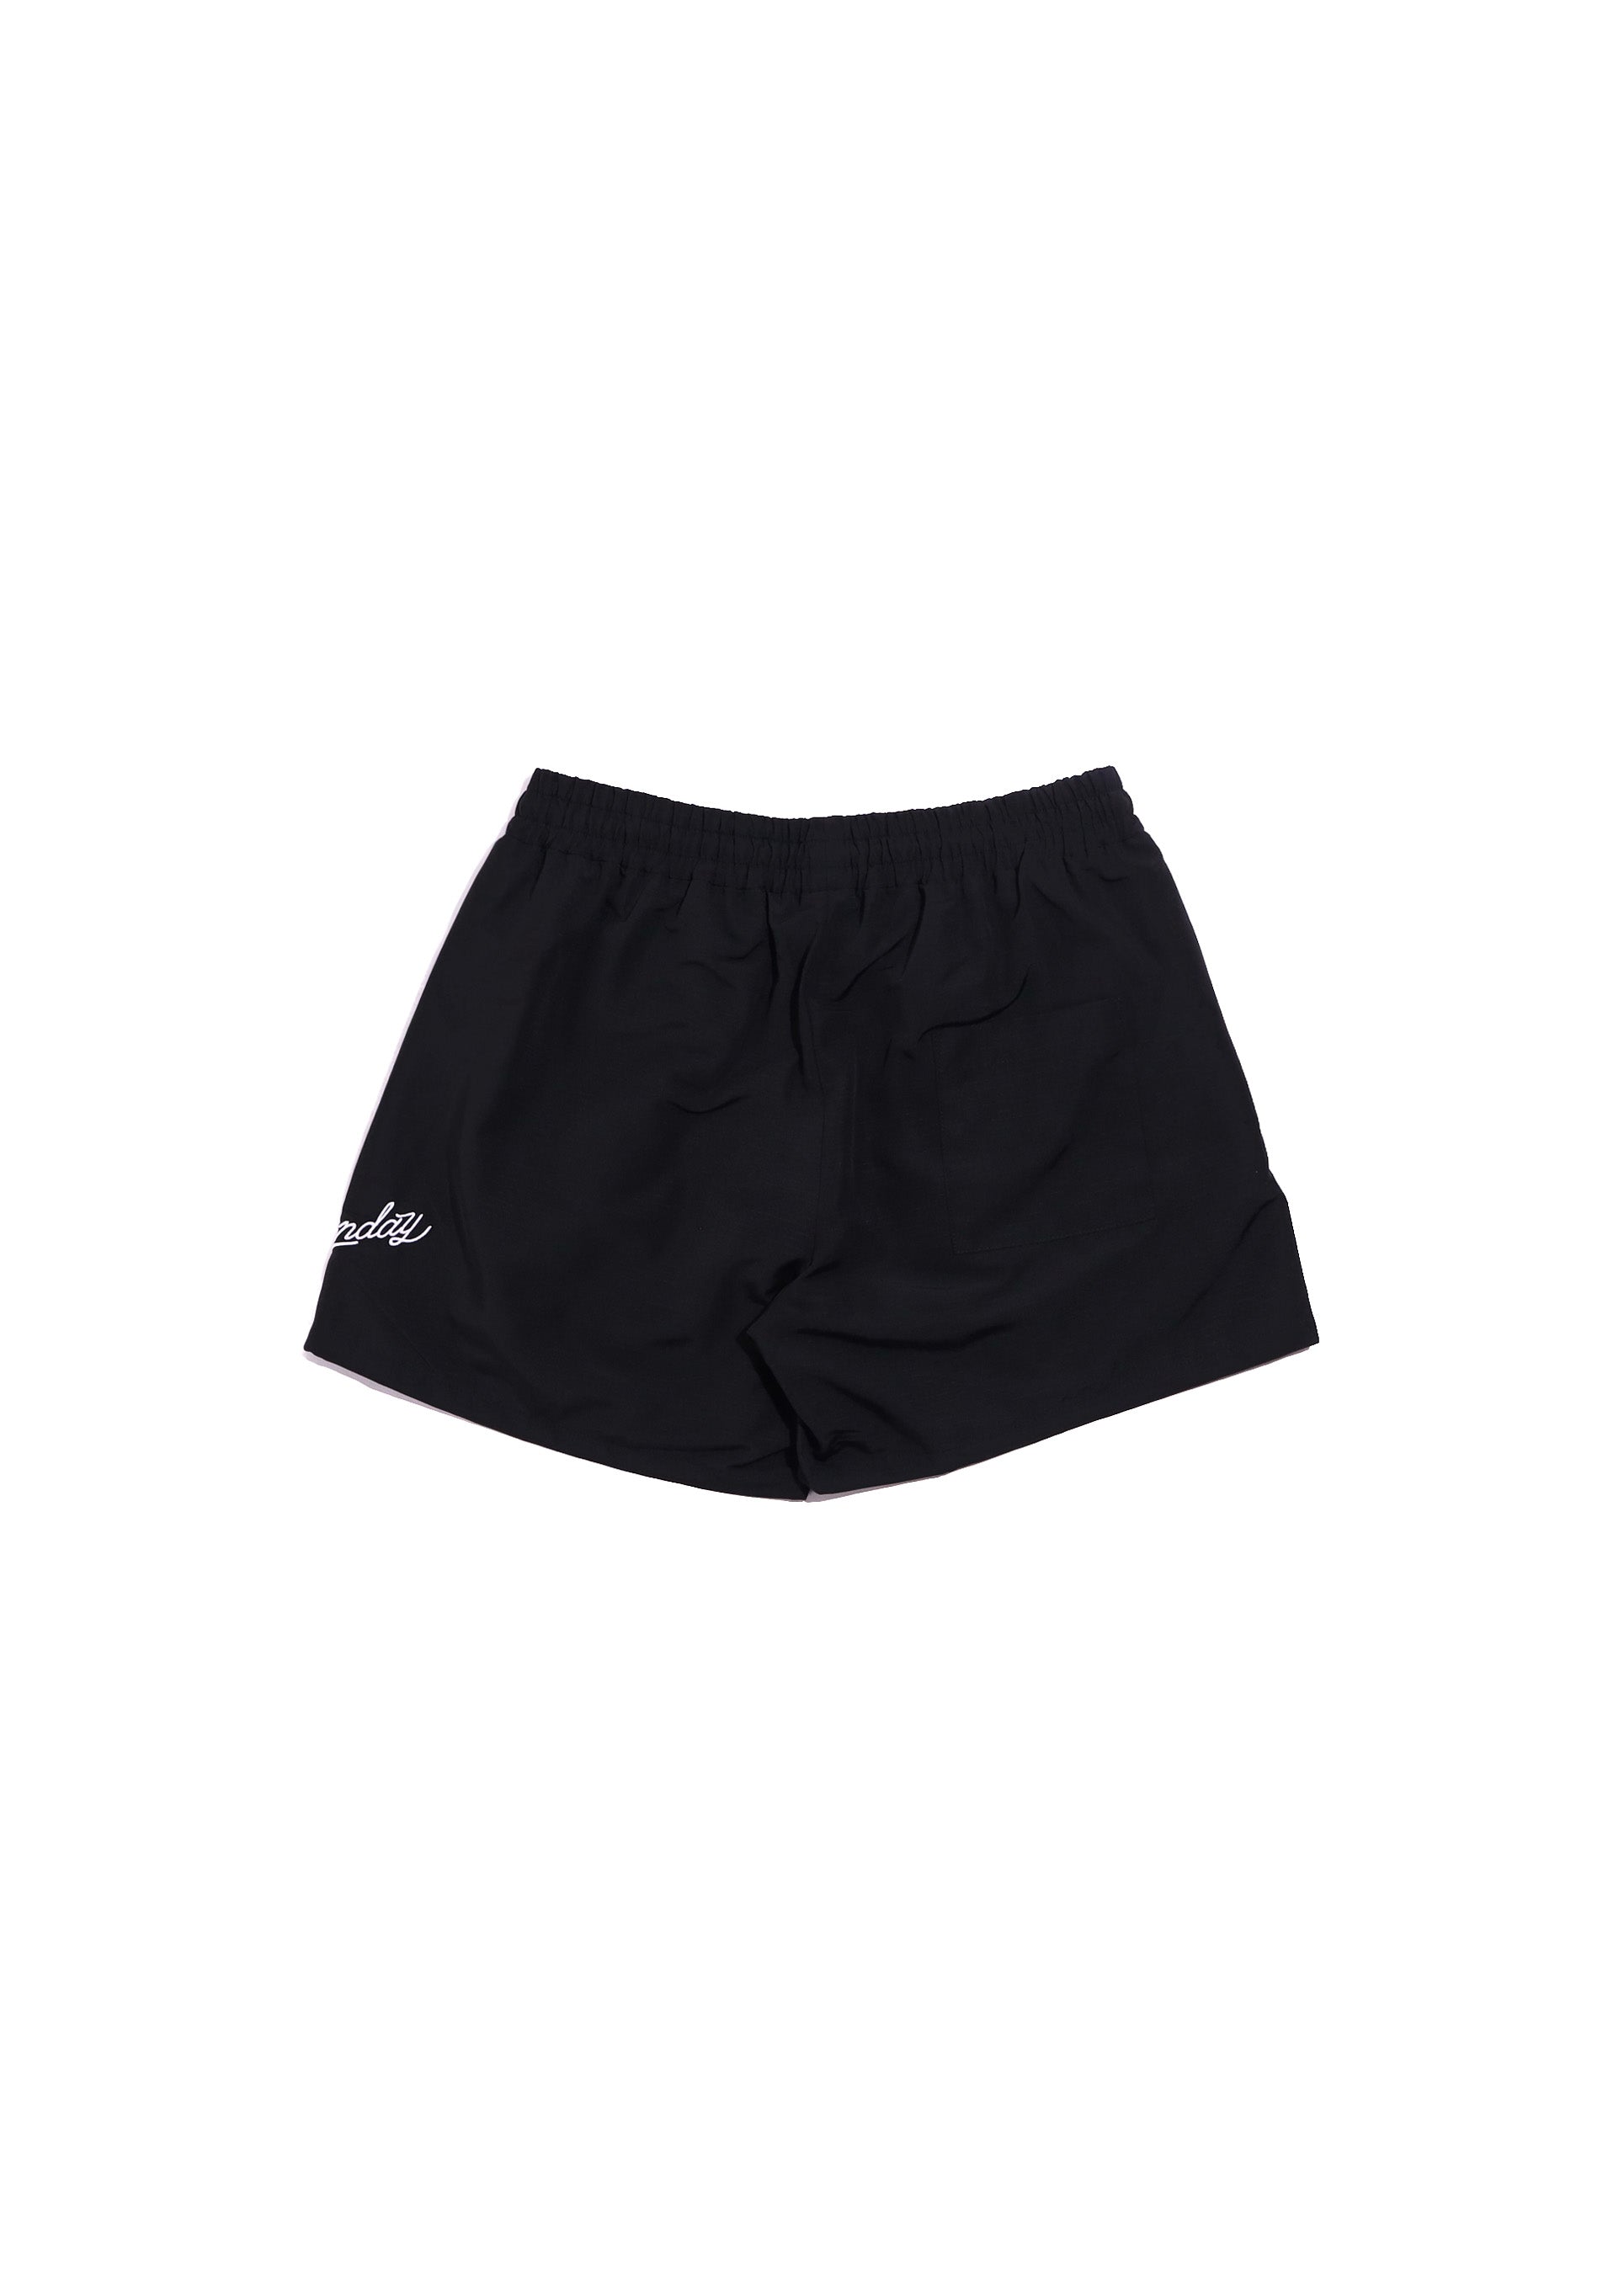 Cursive Ripstop Shorts - Black